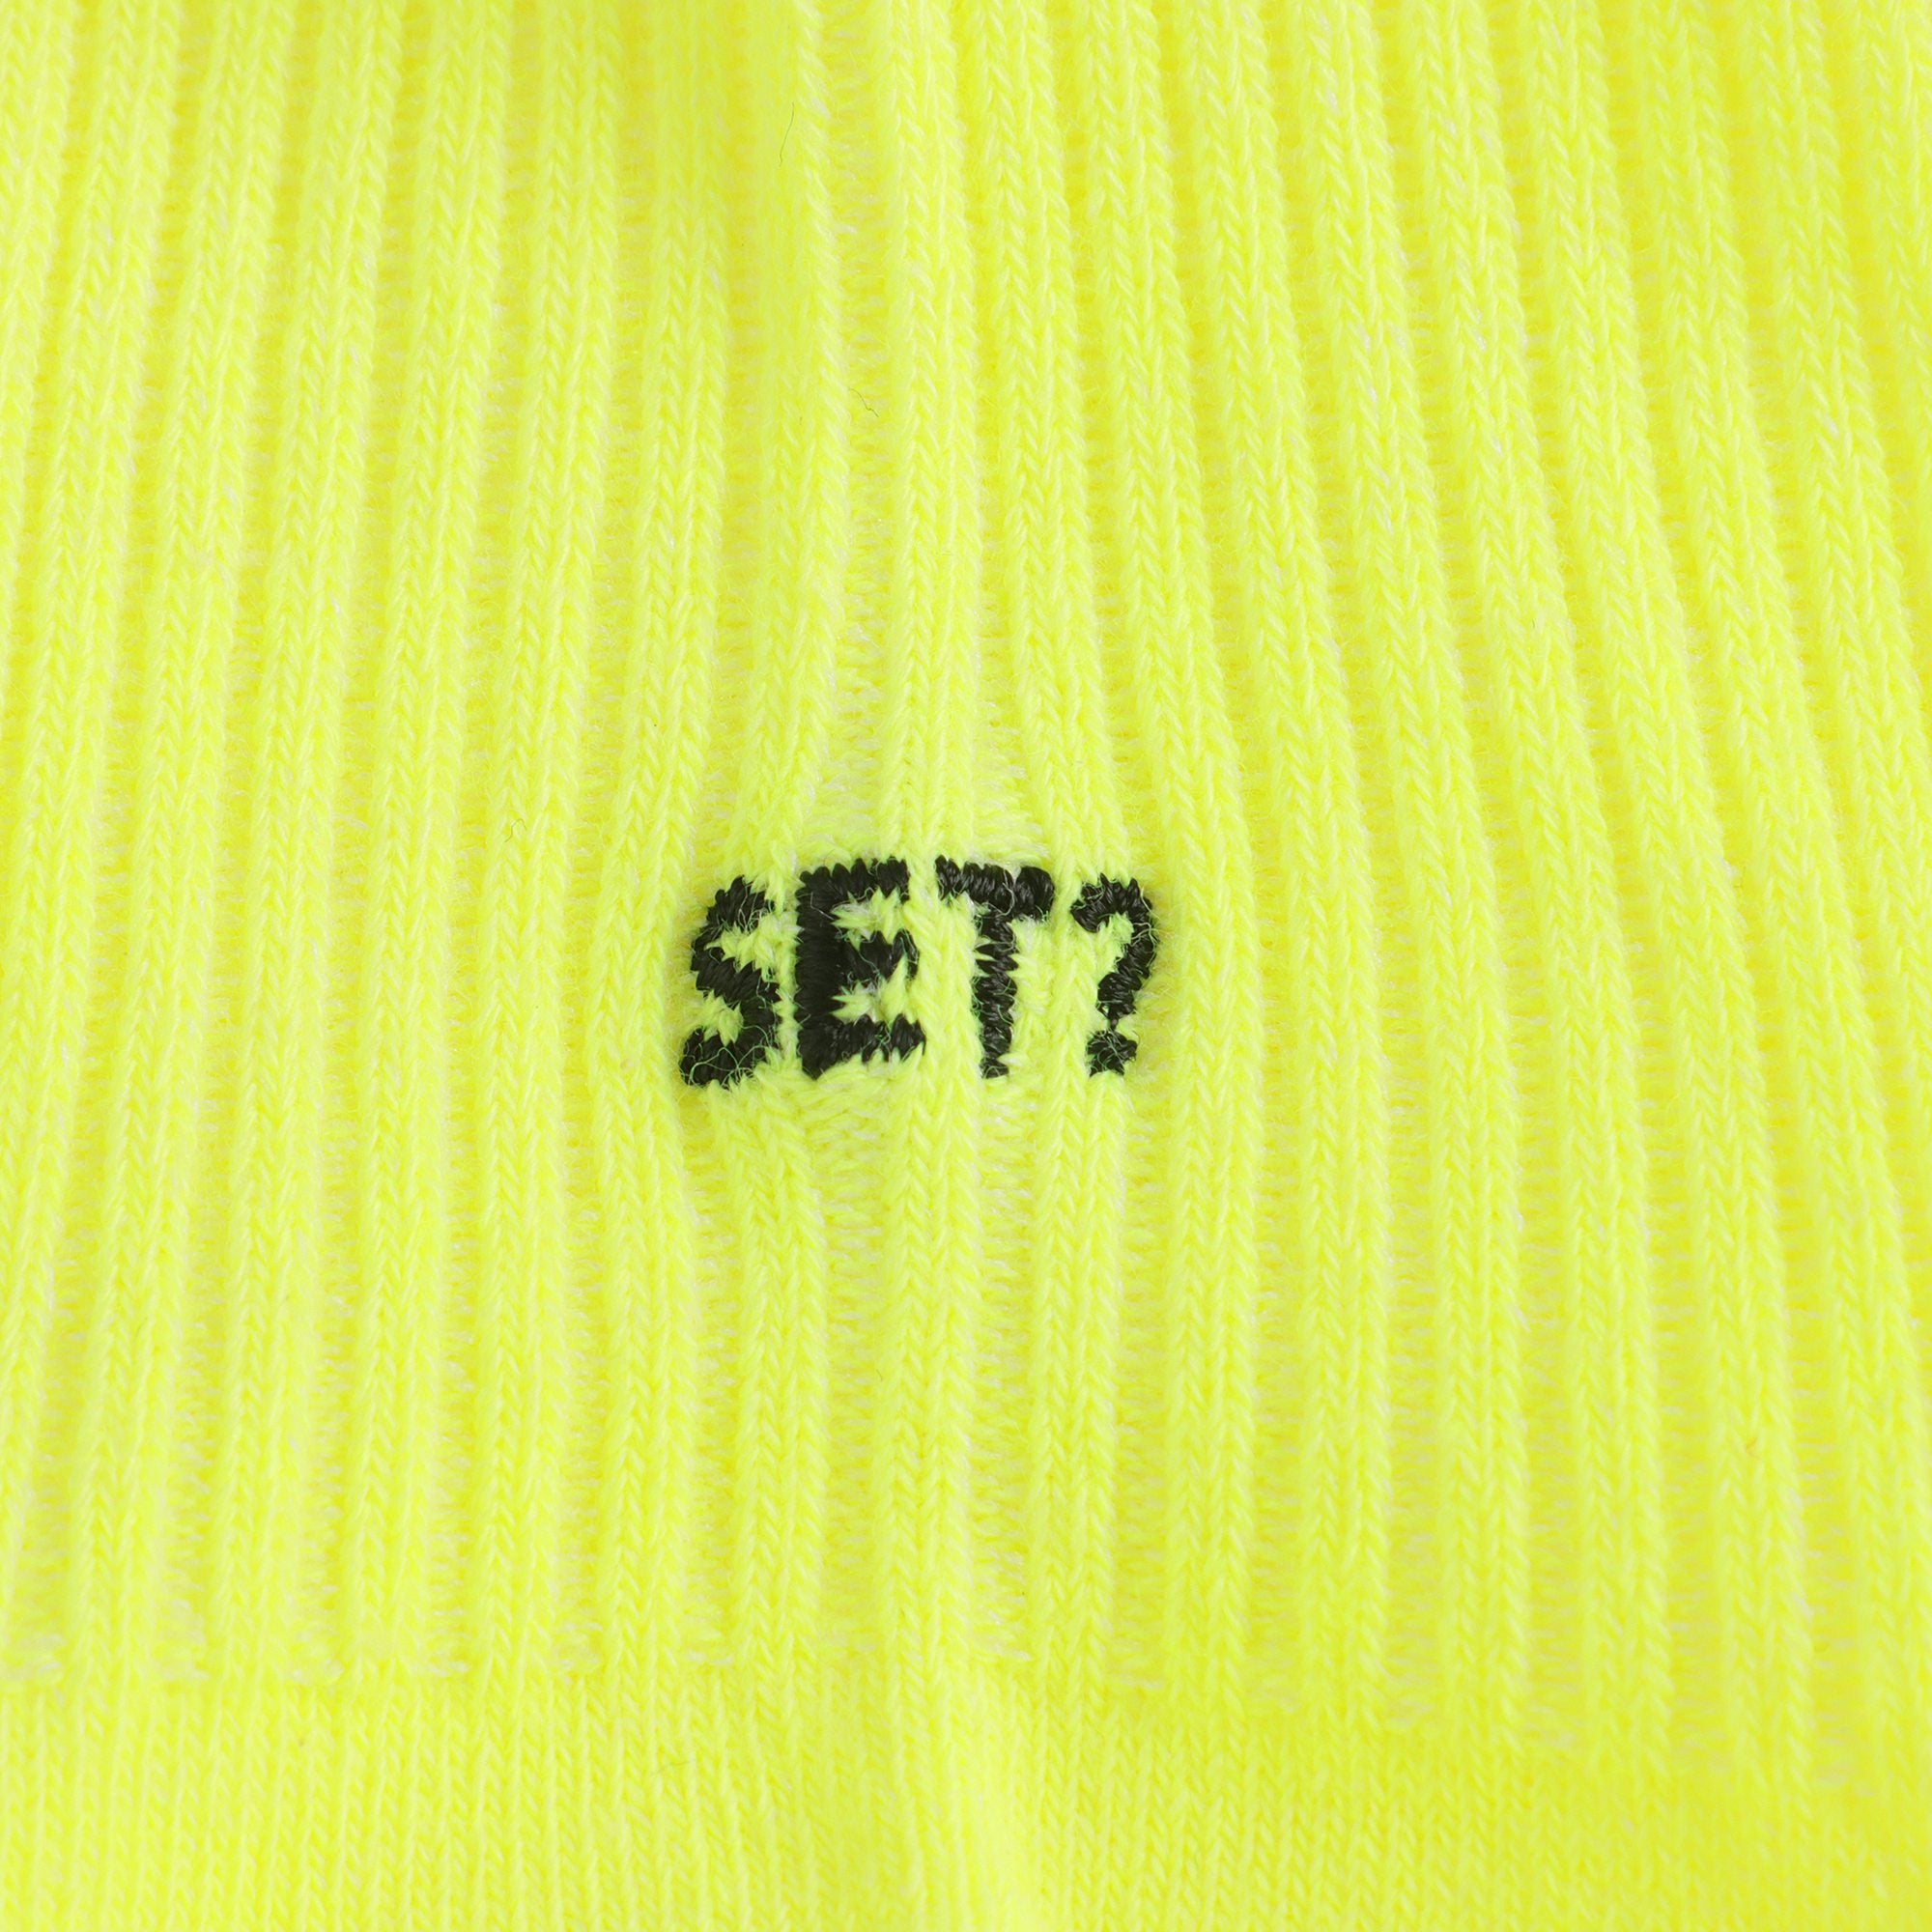 Boys & Girls Neon Yellow Socks